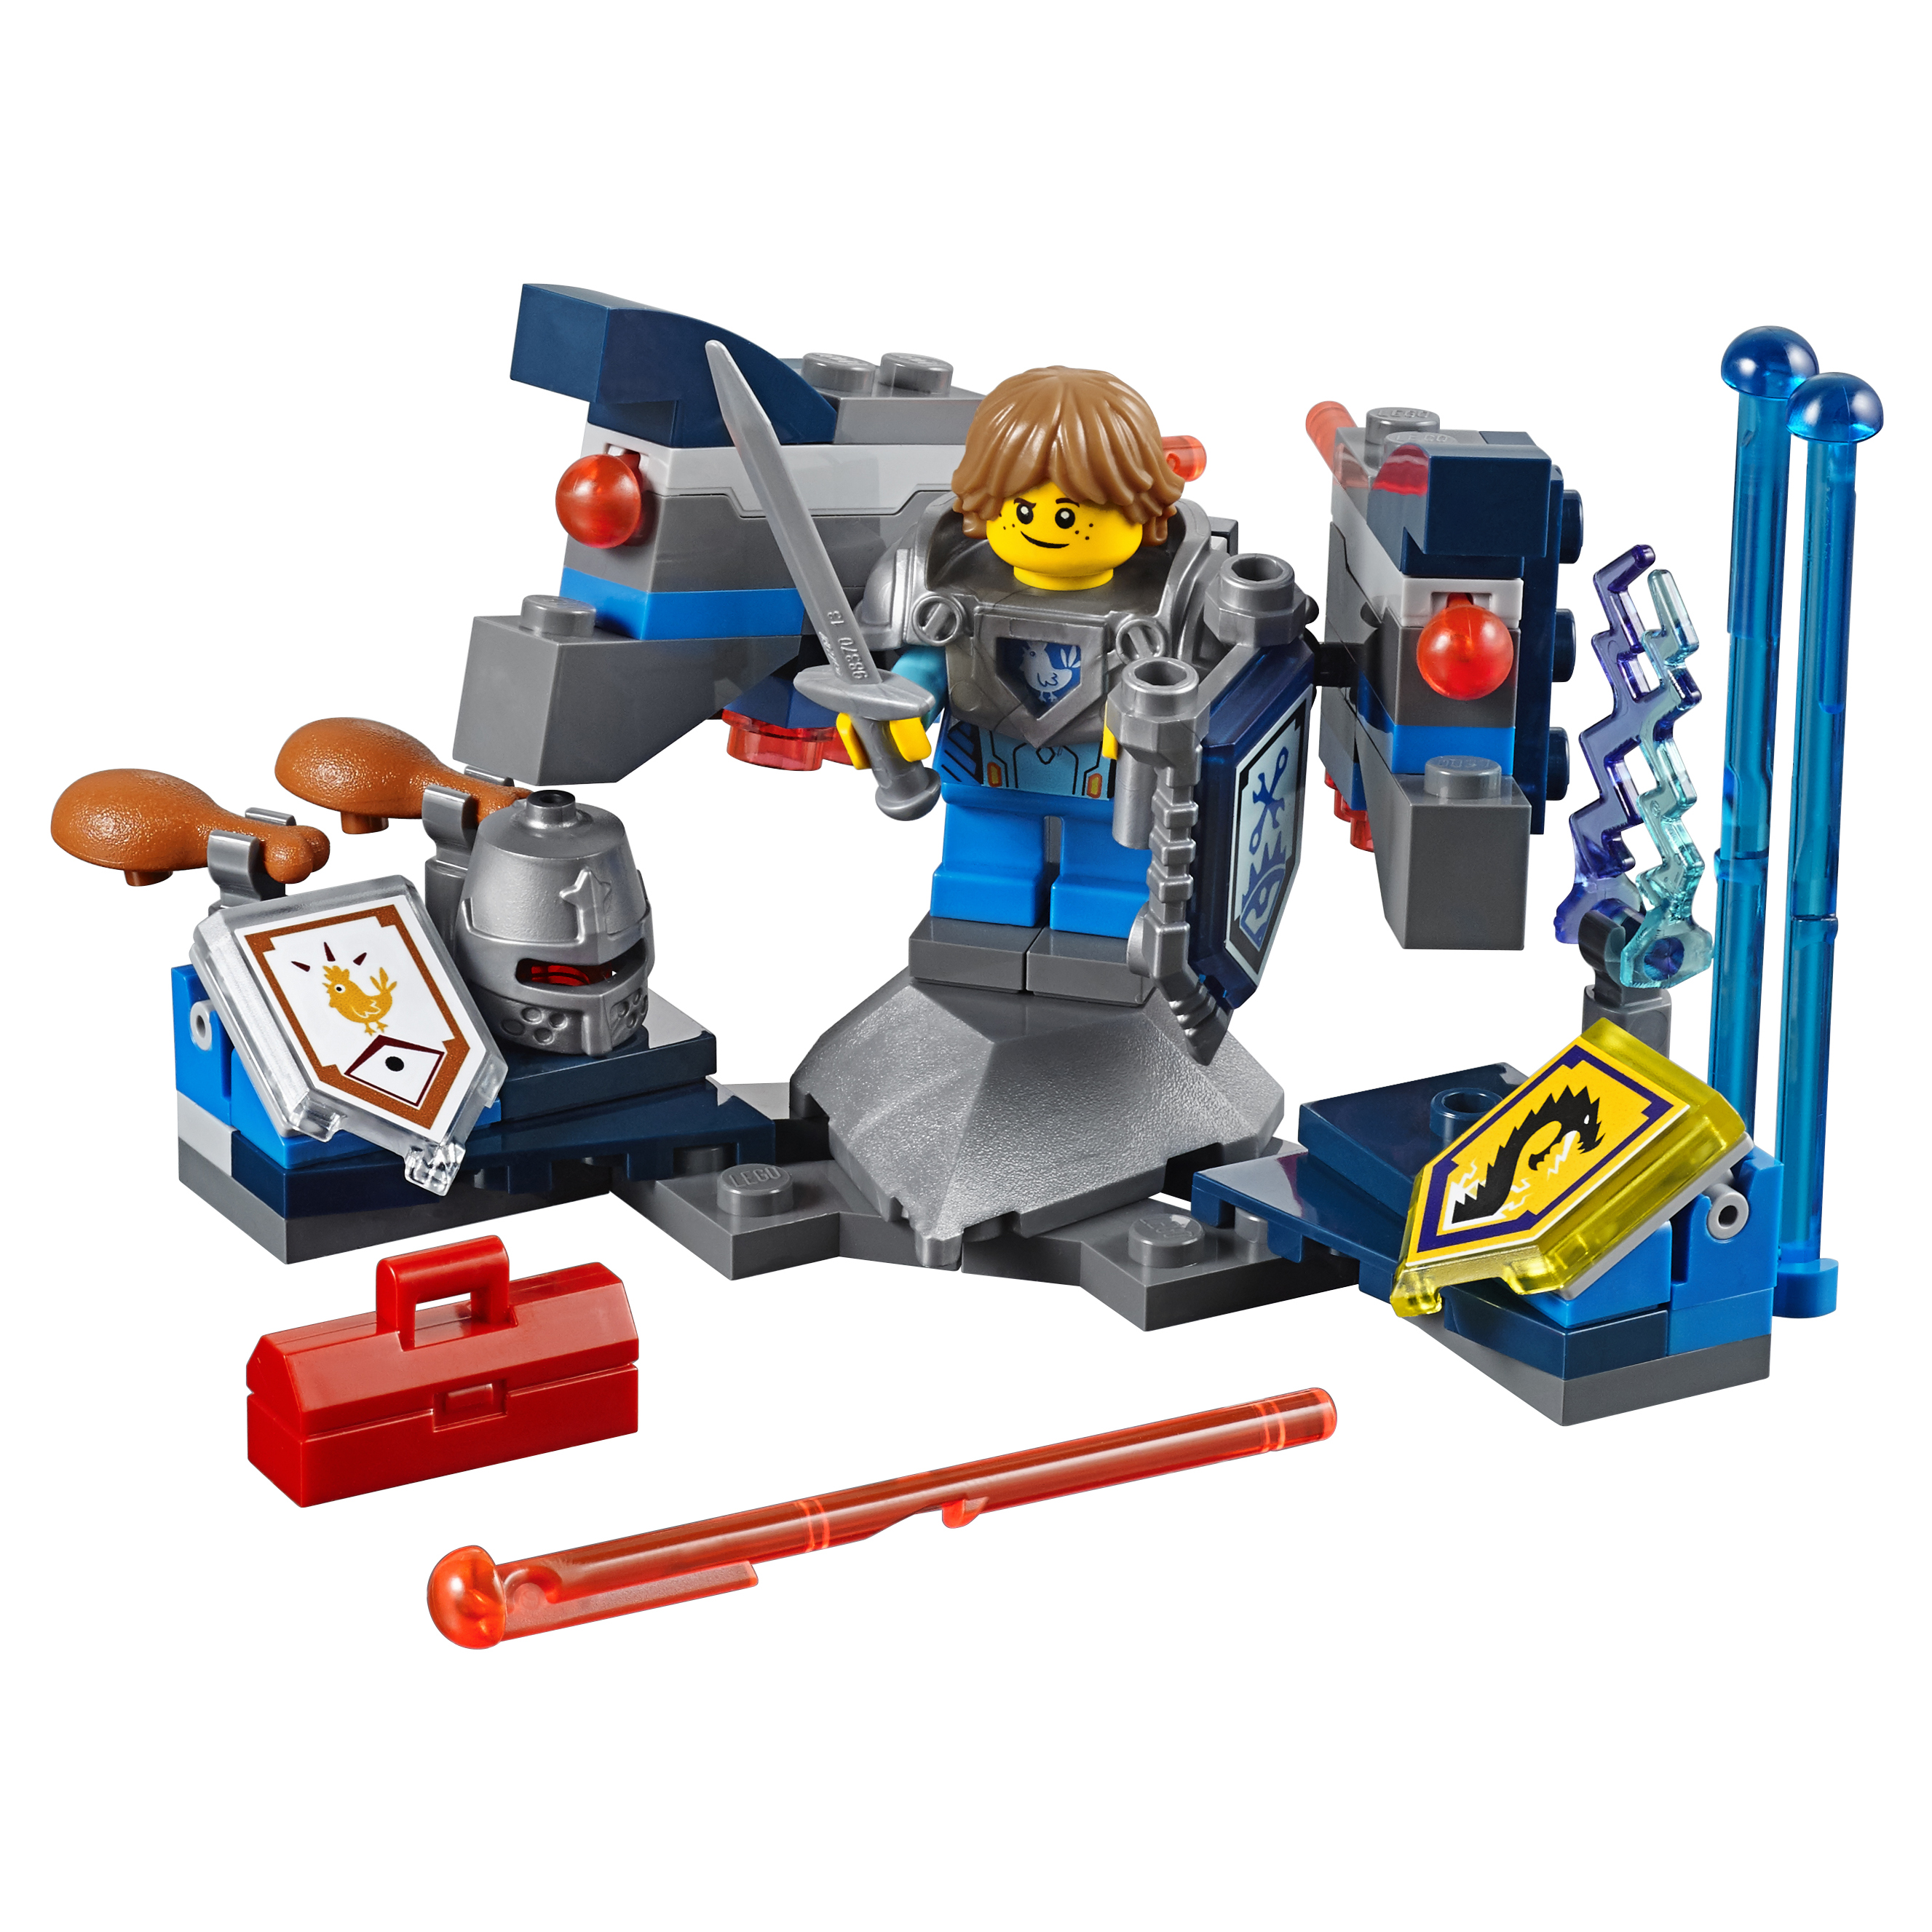 Конструктор LEGO Nexo Knights Робин – Абсолютная сила (70333) конструктор lego nexo knights мэйси – абсолютная сила 70331